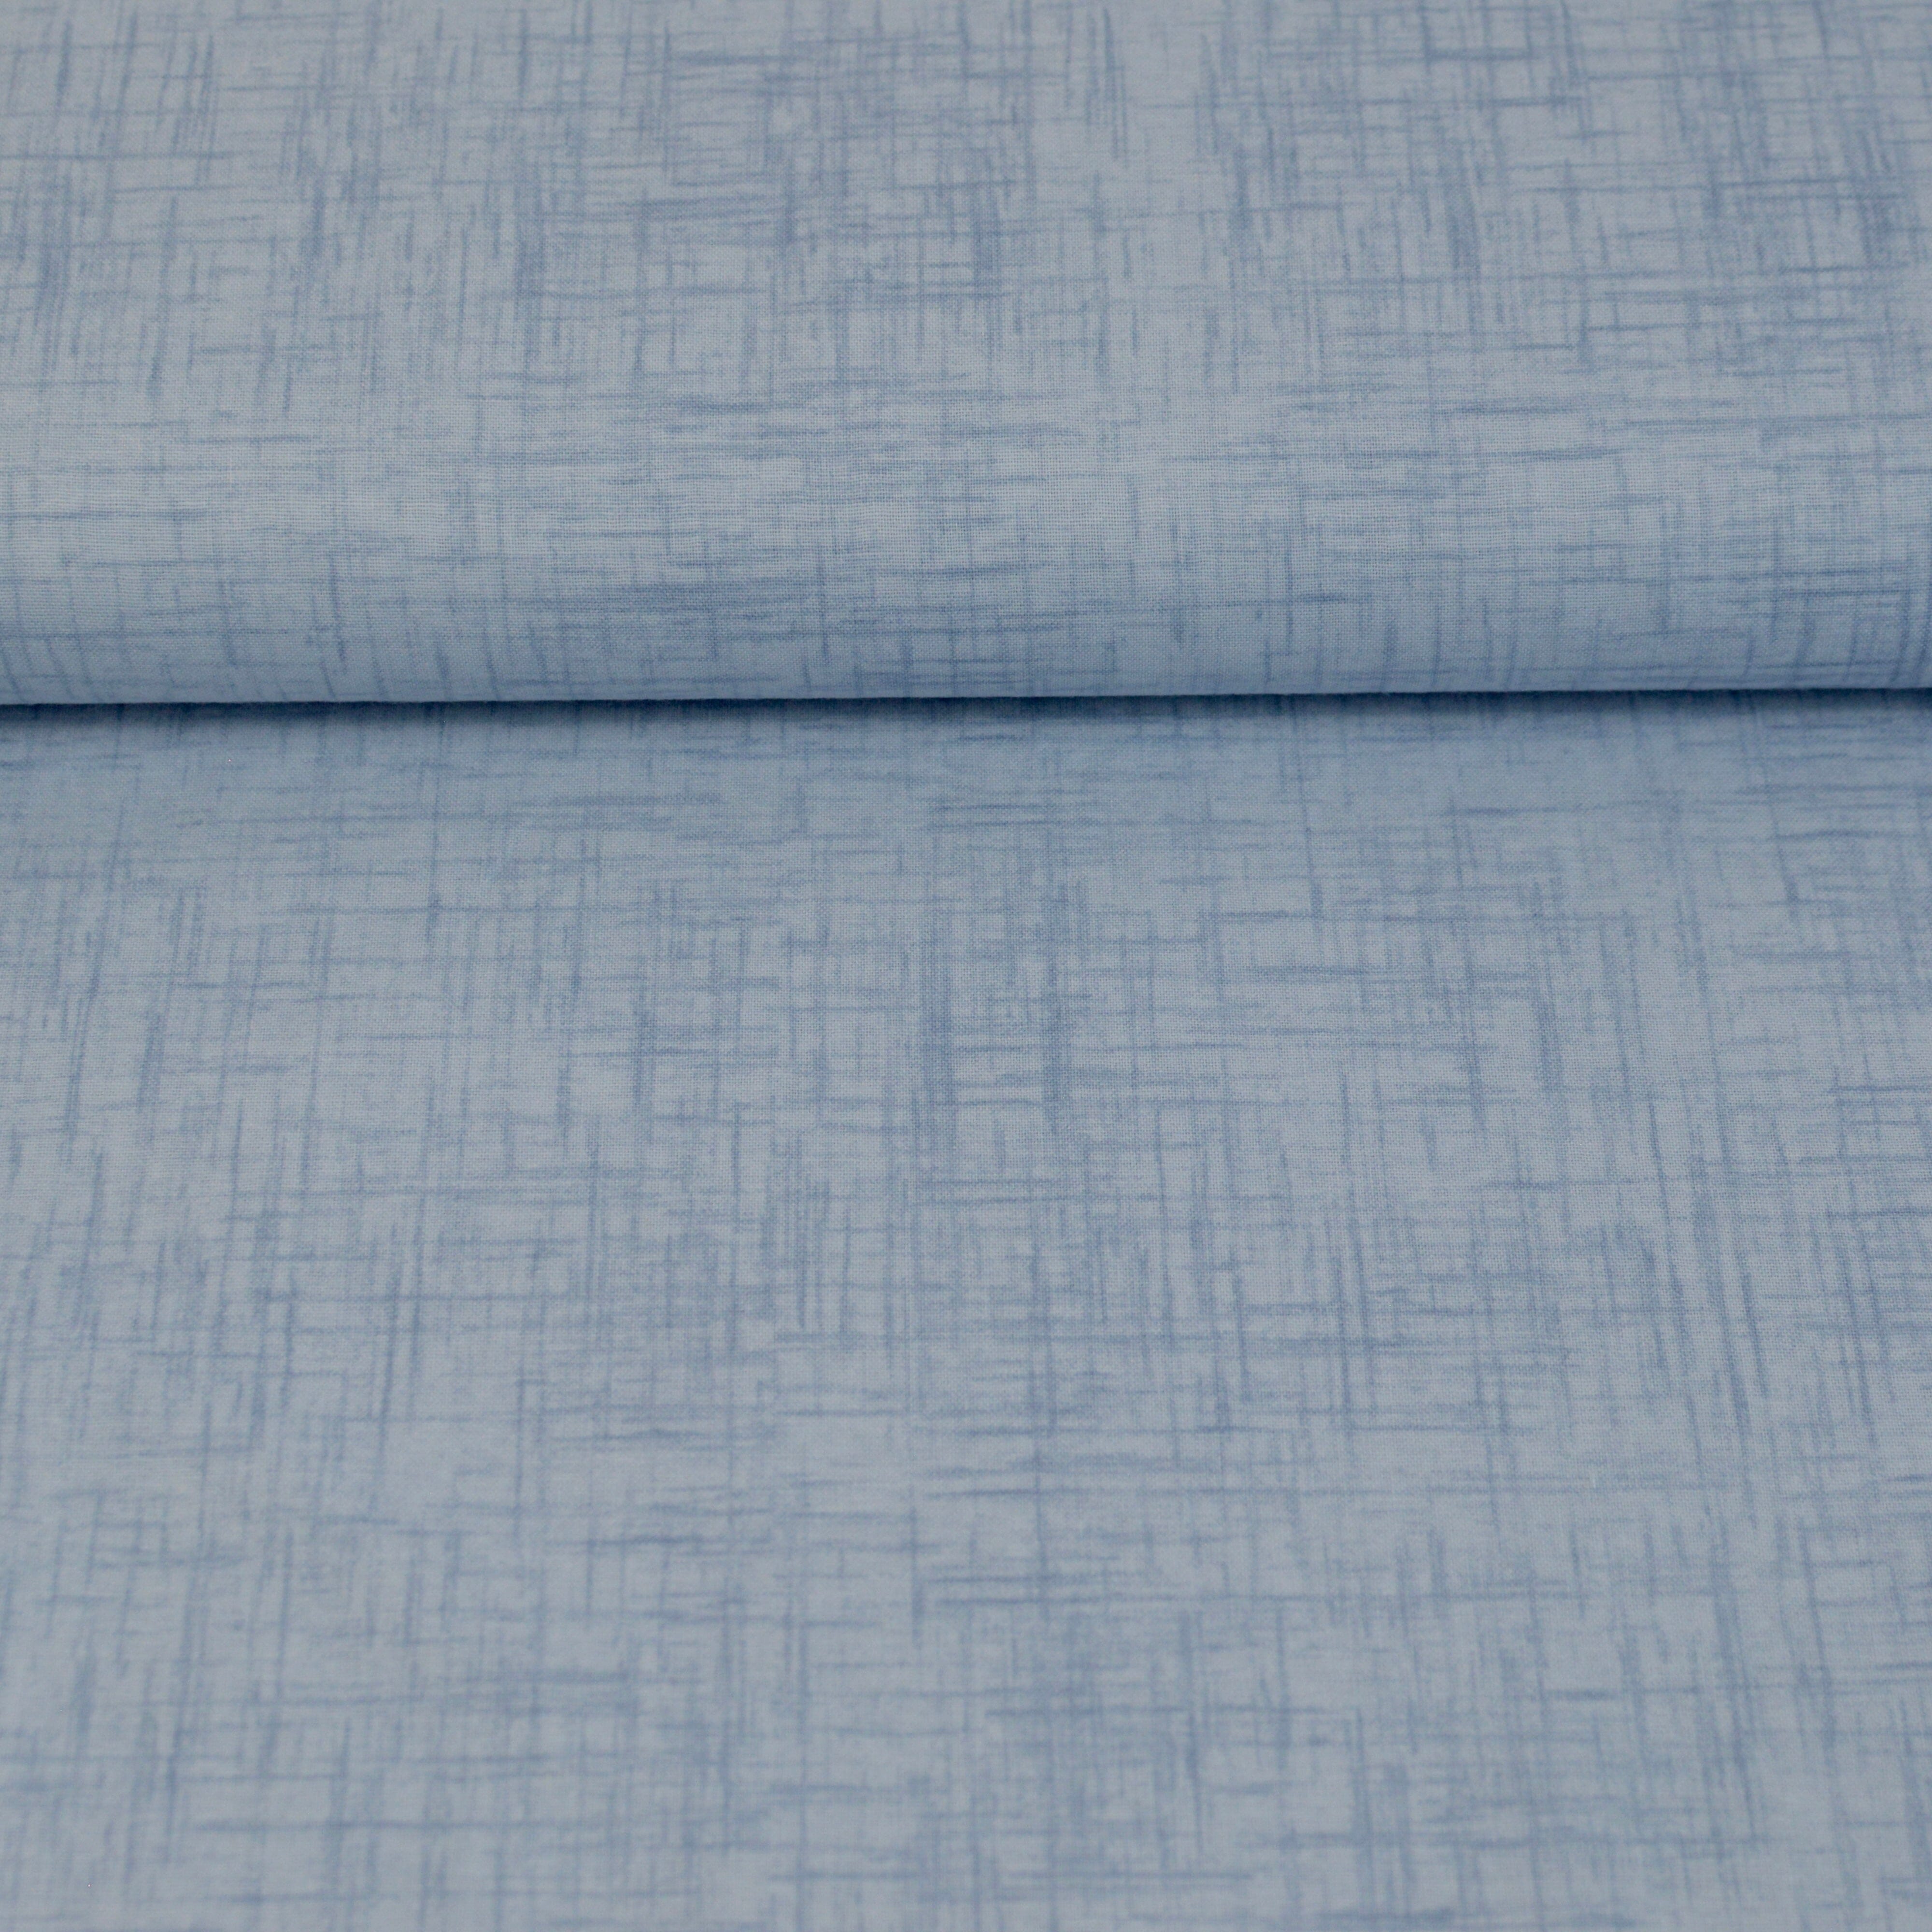 Baumwoll Cretonne - Webware mit Muster in Leinenoptik - jeansblau Fabric poshpinks